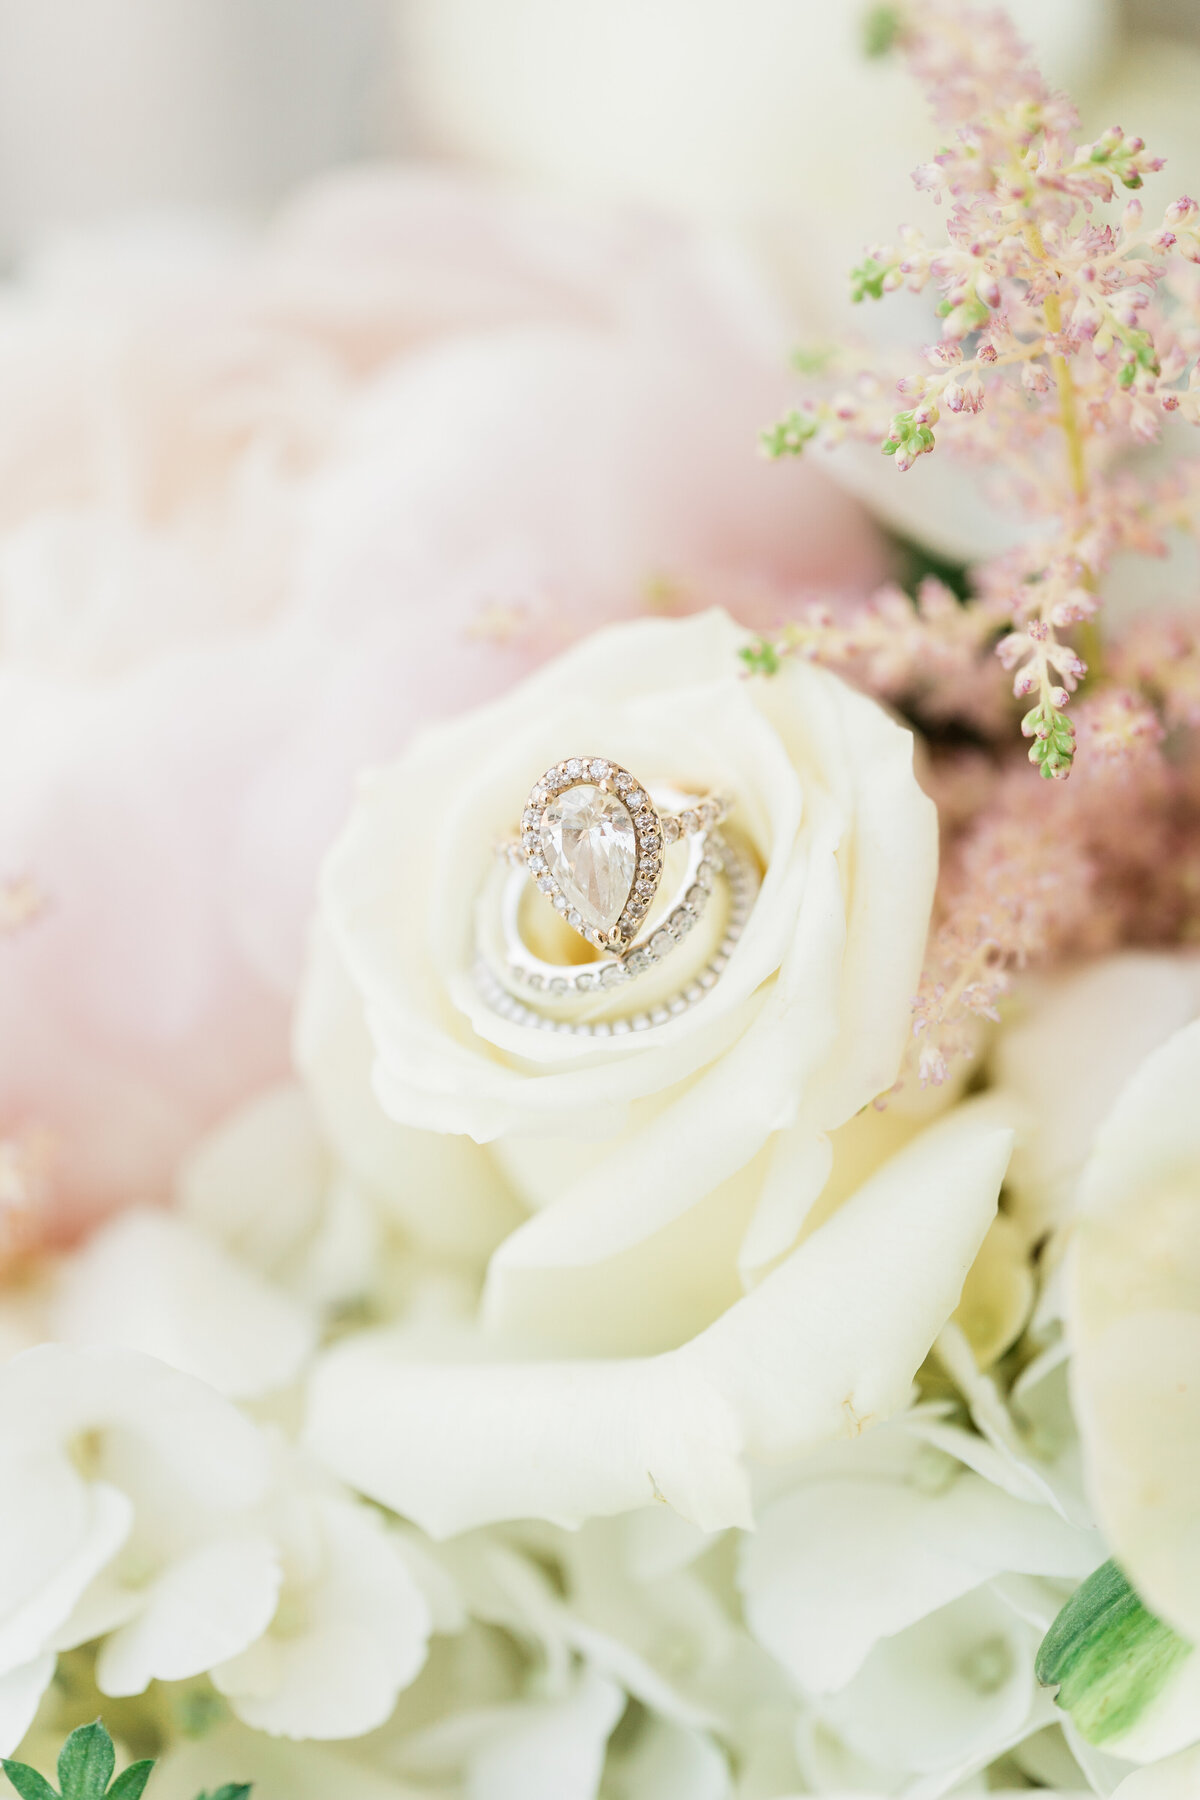 White rose with teardrop diamond ring